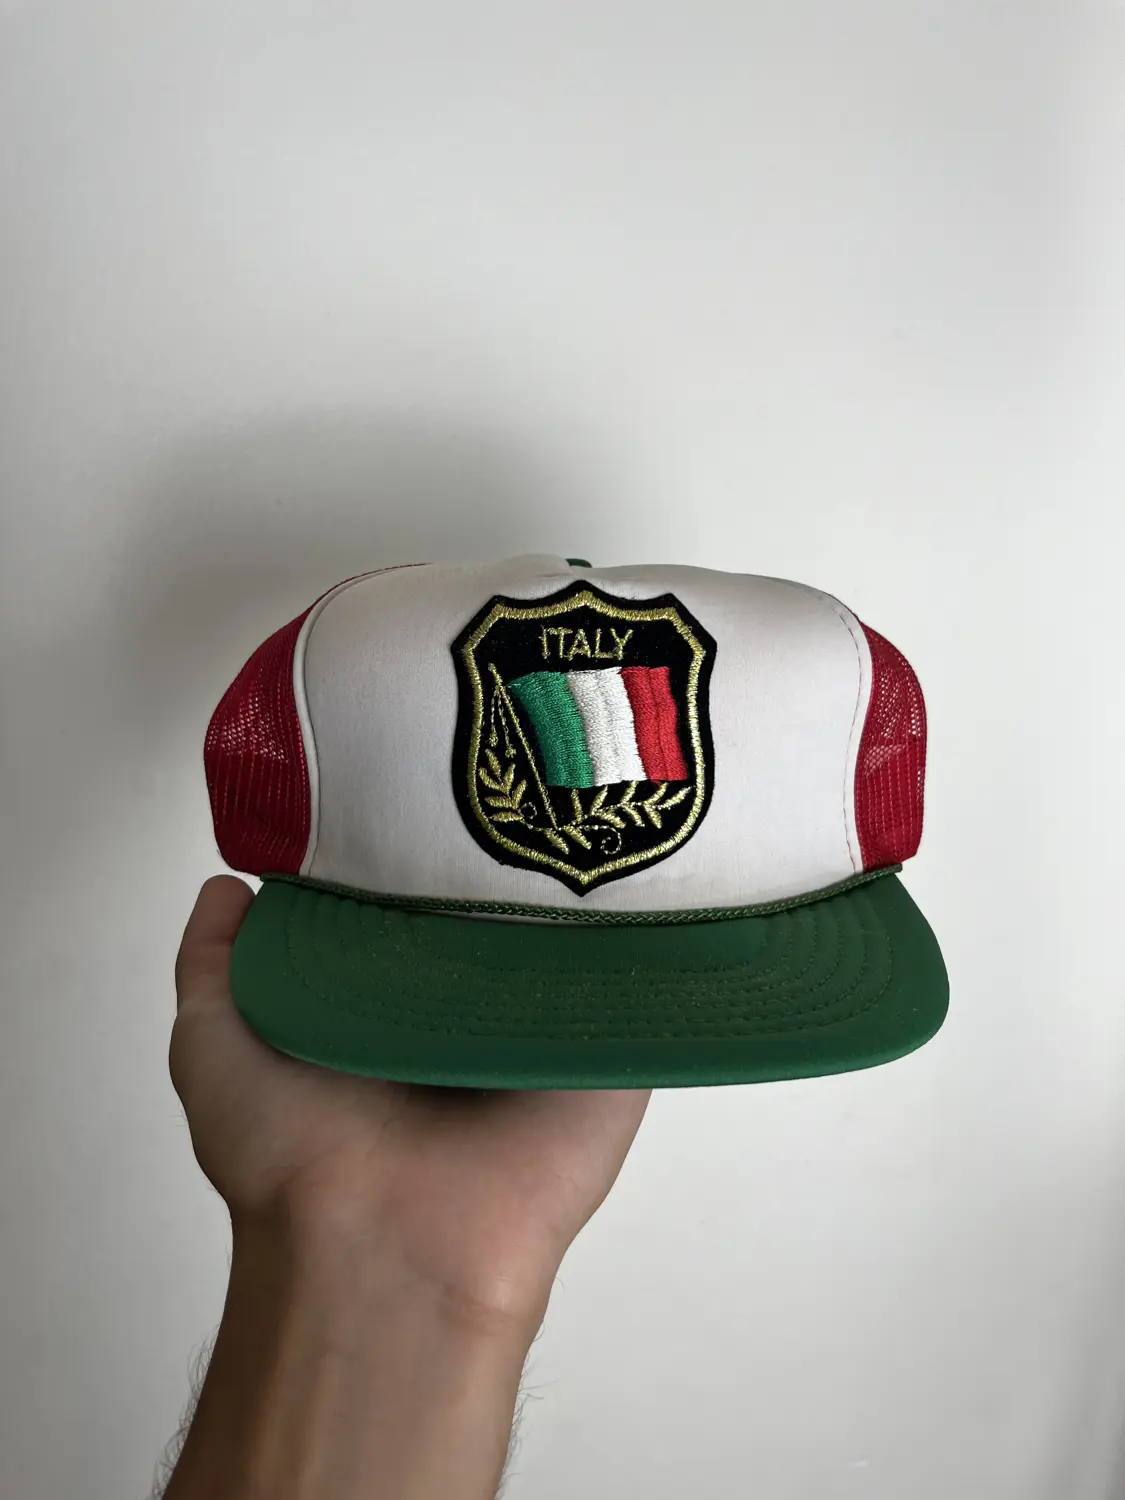 Vintage Italy hat